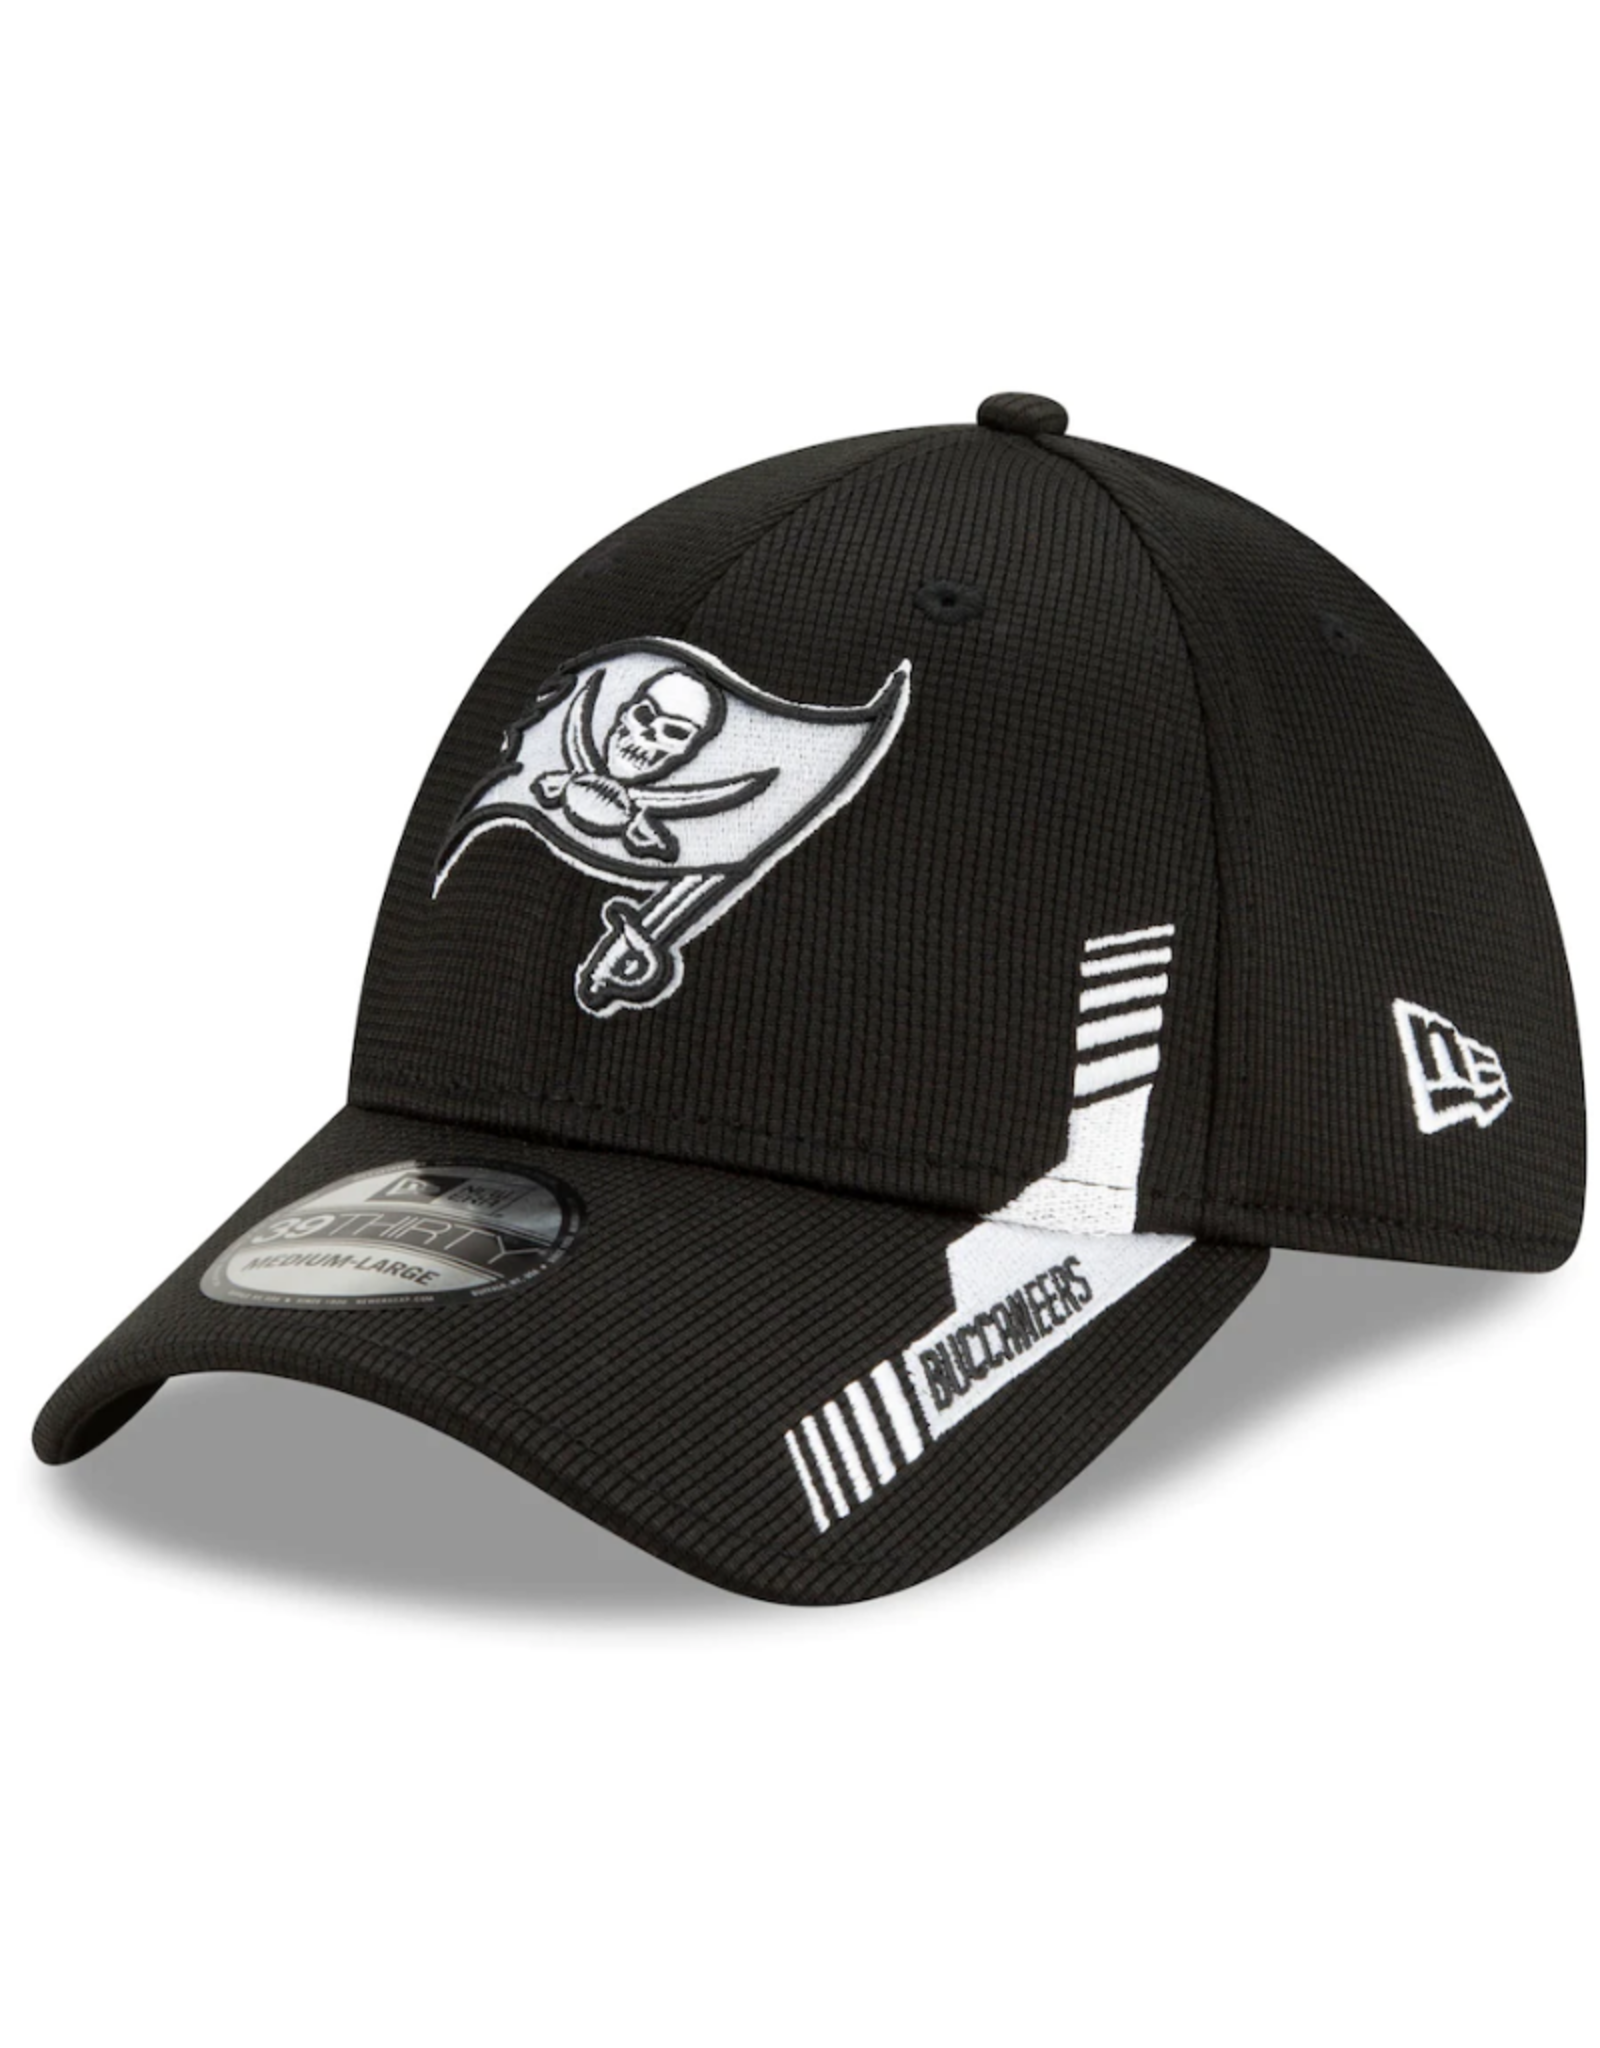 New Era Men's '21 39THIRTY Sideline Home Hat Tampa Bay Buccaneers Black/White